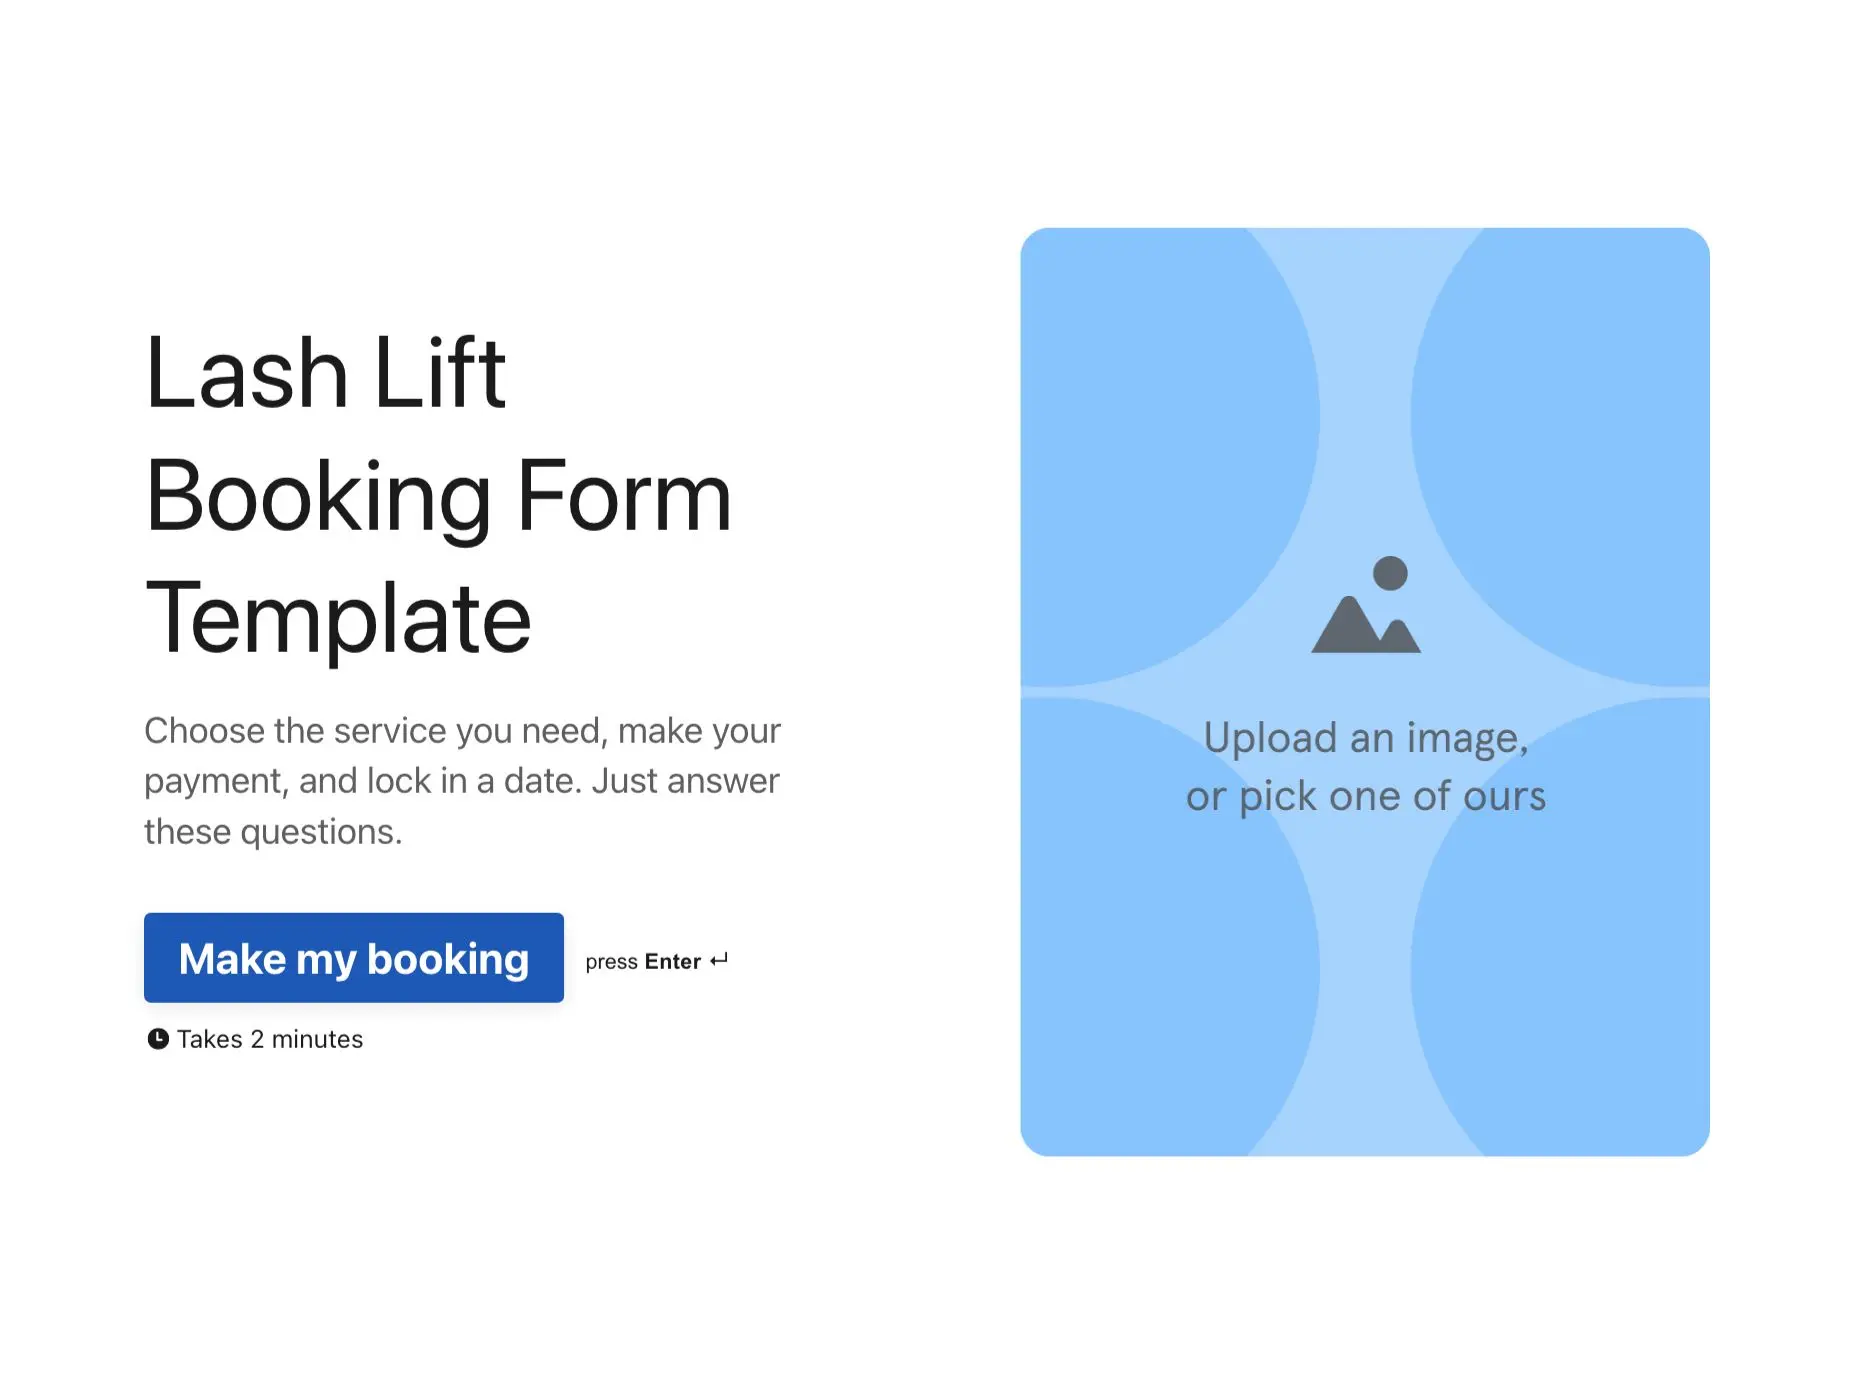 Lash Lift Booking Form Template Hero